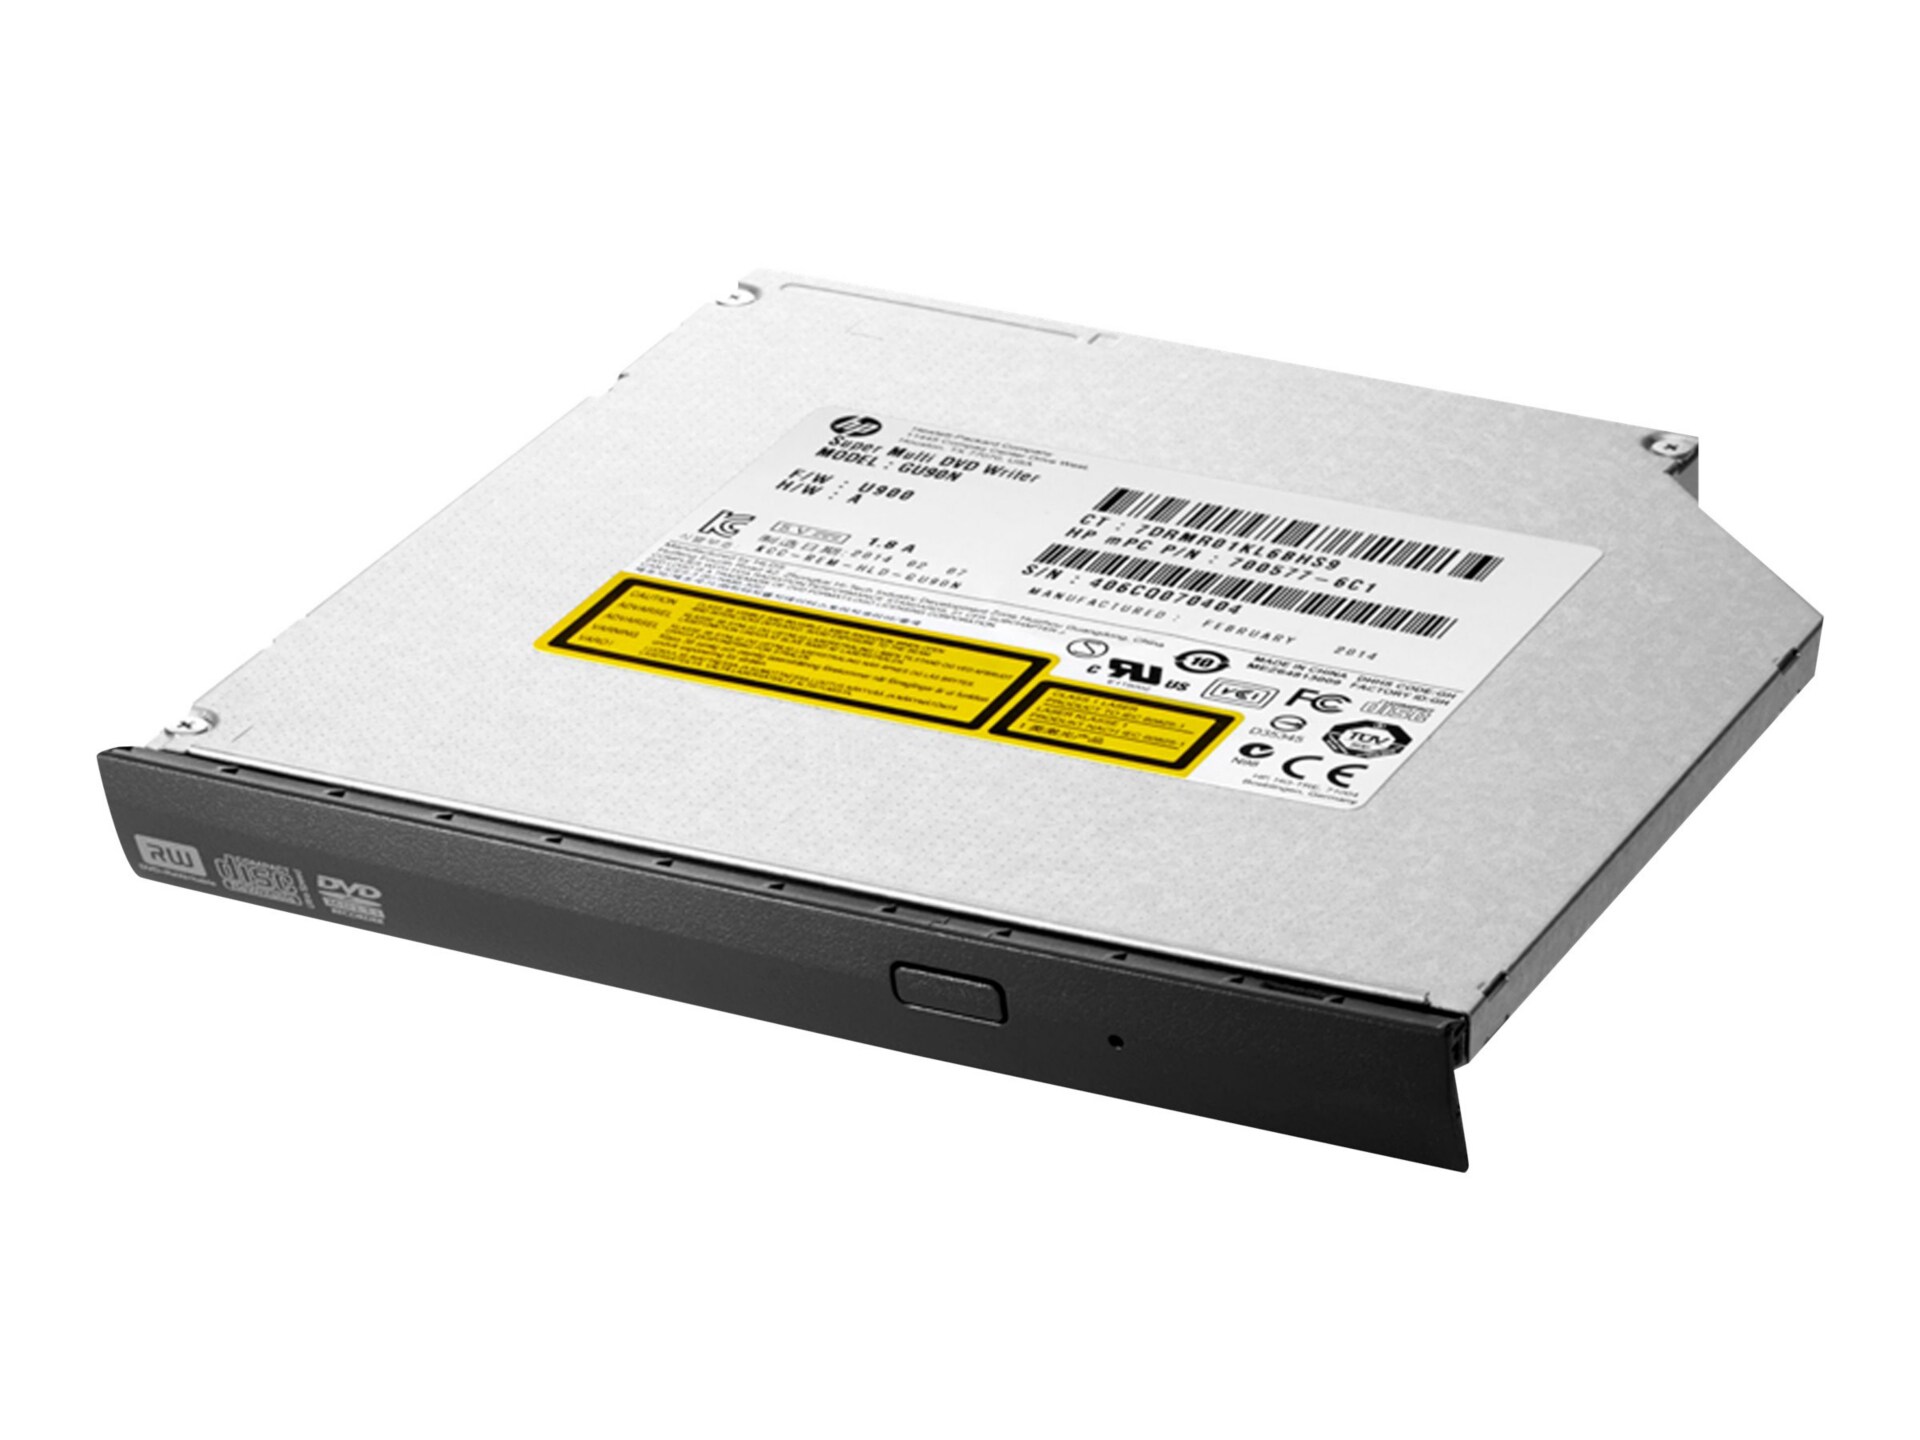 HP DVD±RW (+R DL) / DVD-RAM drive - Serial ATA - internal